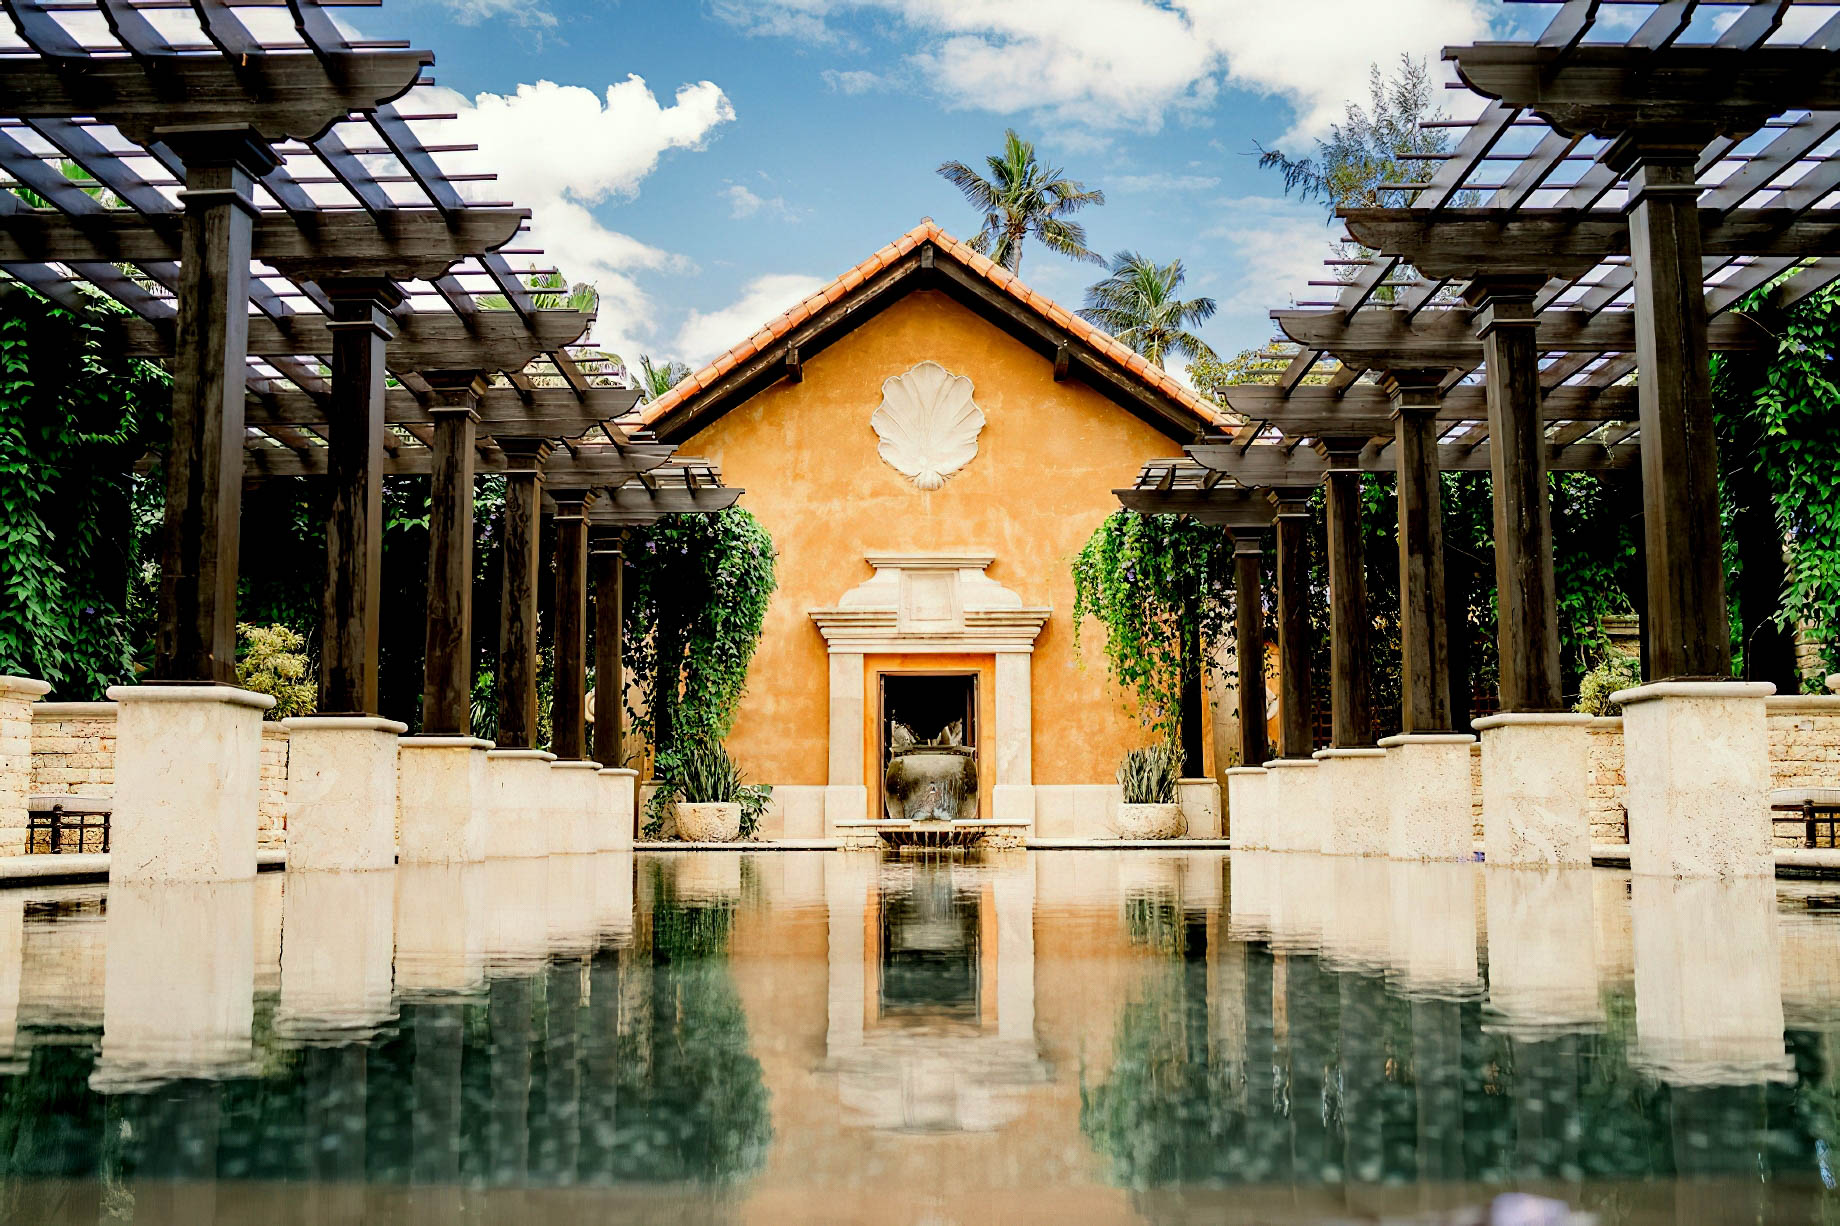 The Ritz-Carlton, Dorado Beach Reserve Resort – Puerto Rico – Spa Botanico Exterior Infinity Reflection Pool